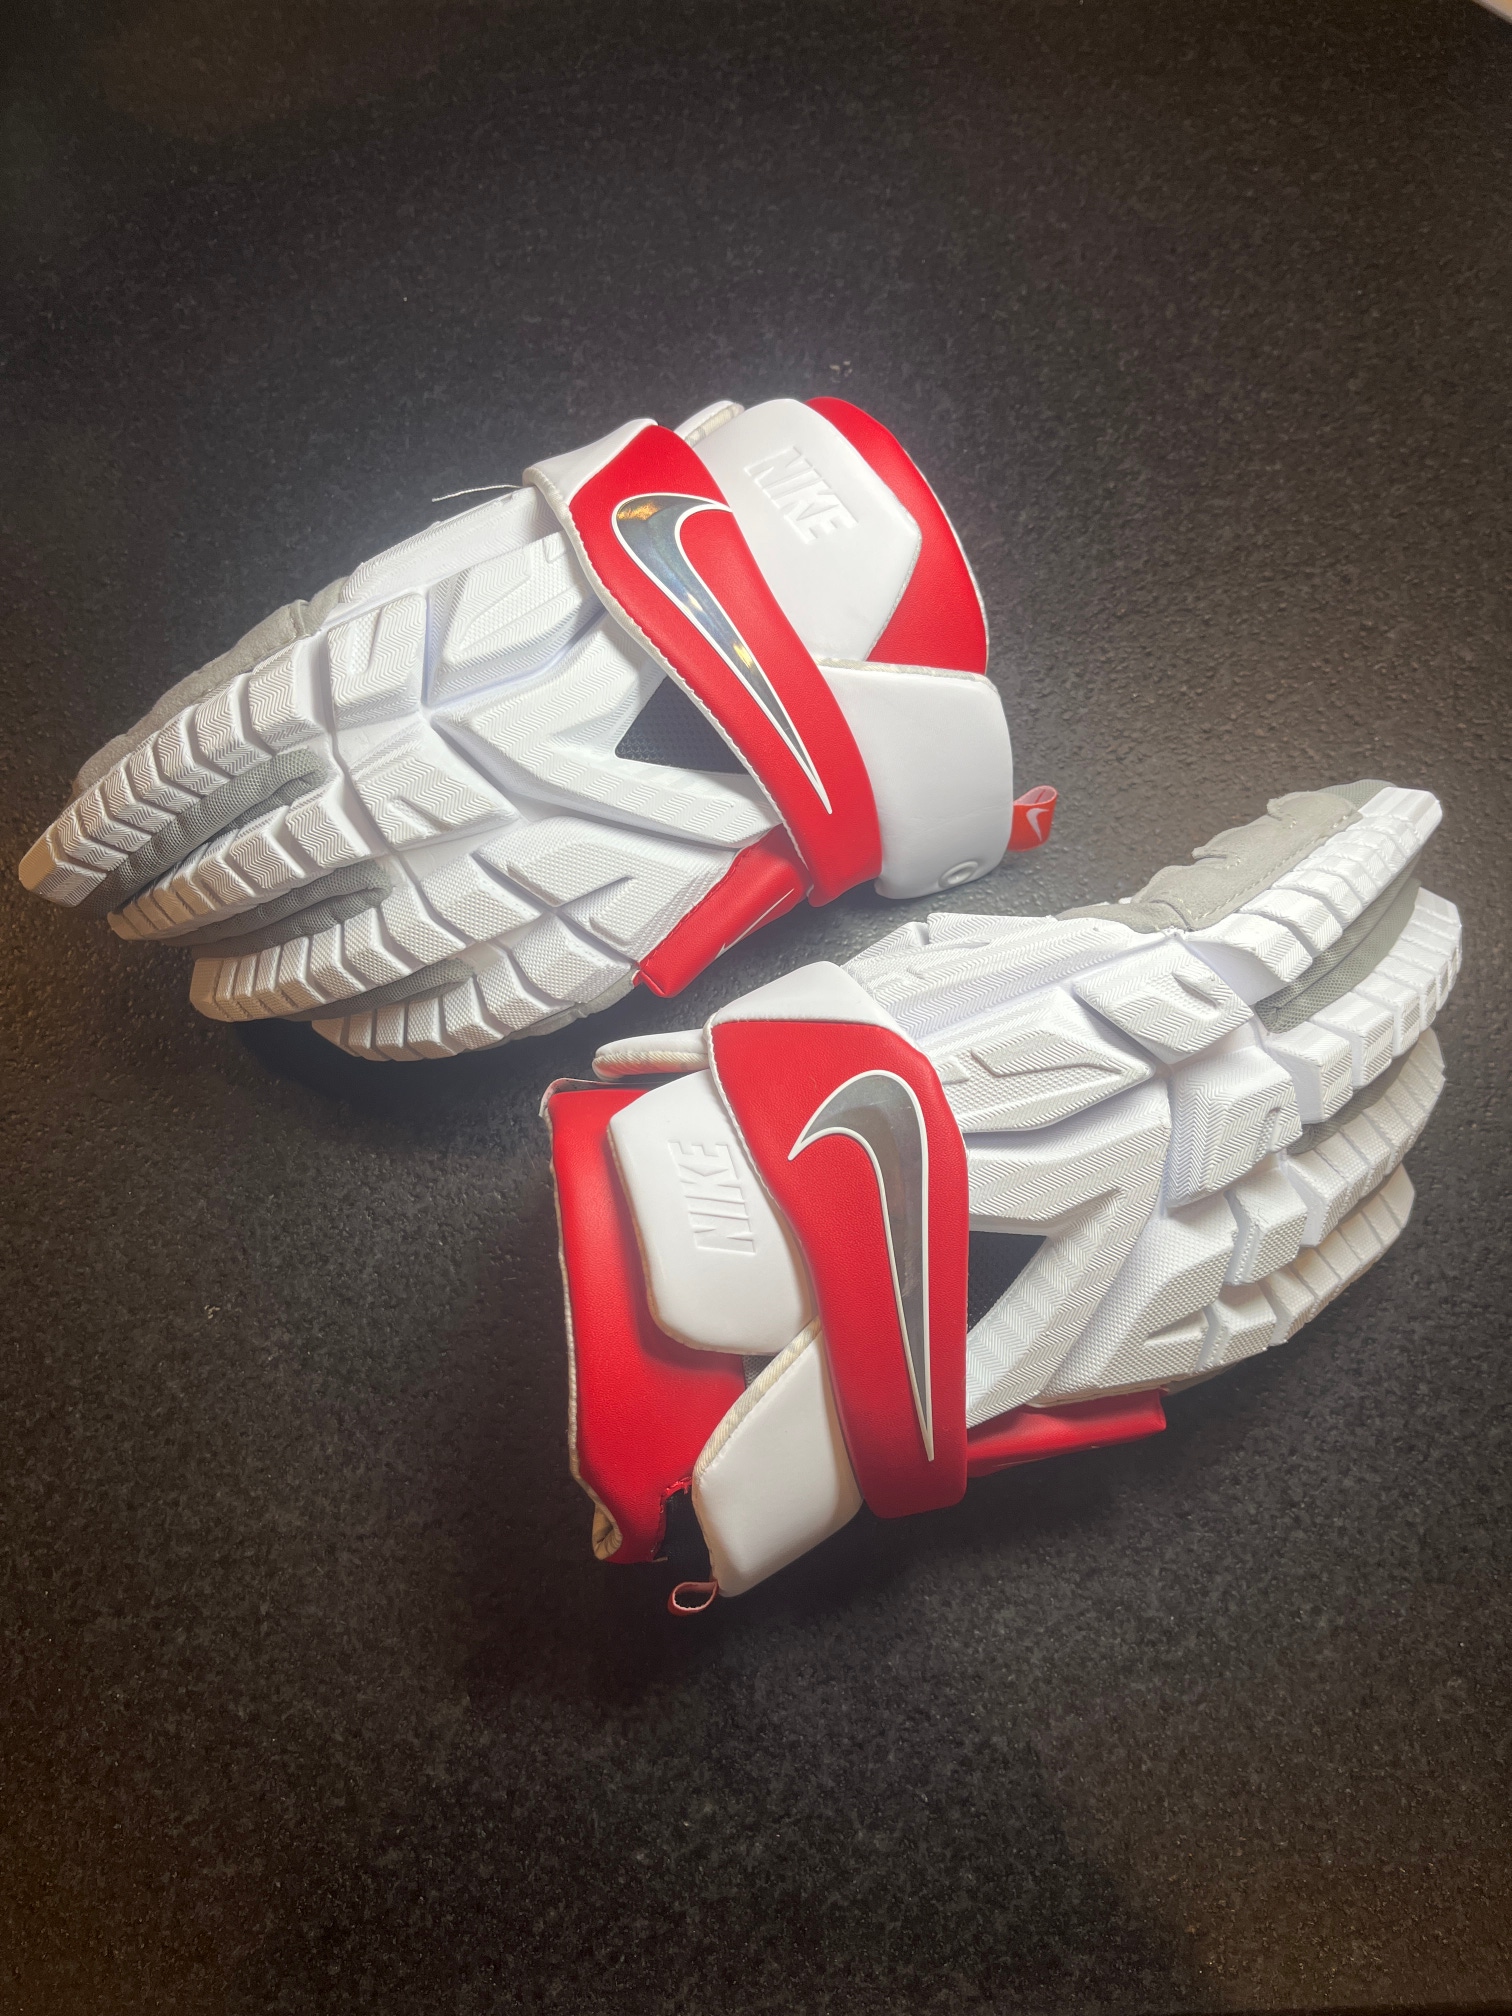 New Nike Vapor Premier Lacrosse Gloves Large